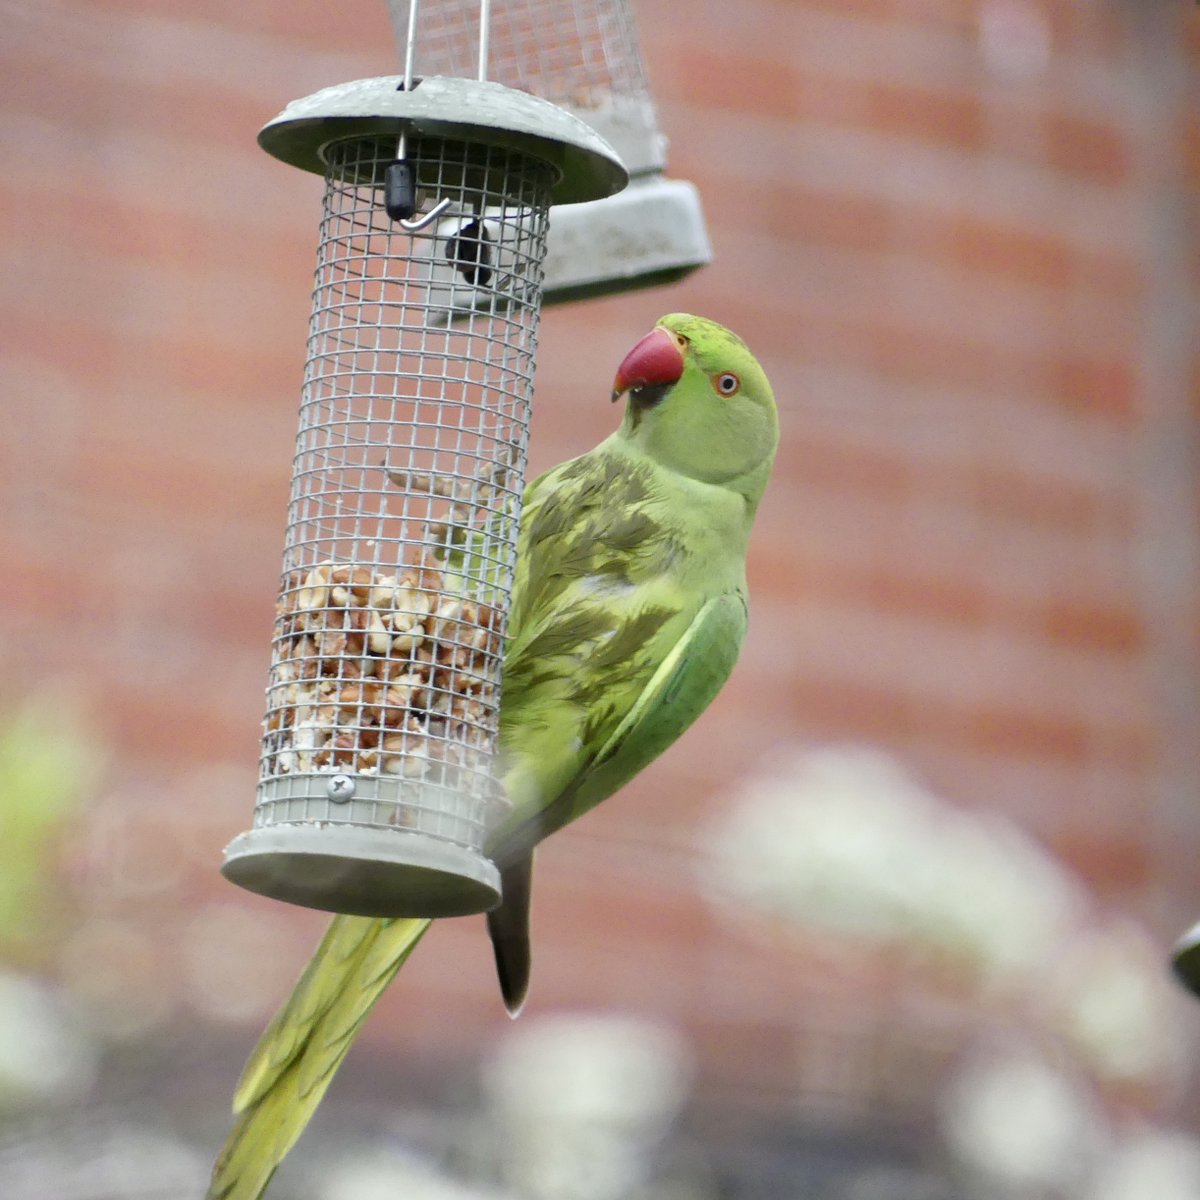 Female parakeet in Didsbury Manchester

#southmanchester #didsbury #birding #birdphotography #birdsoftwitter #birds